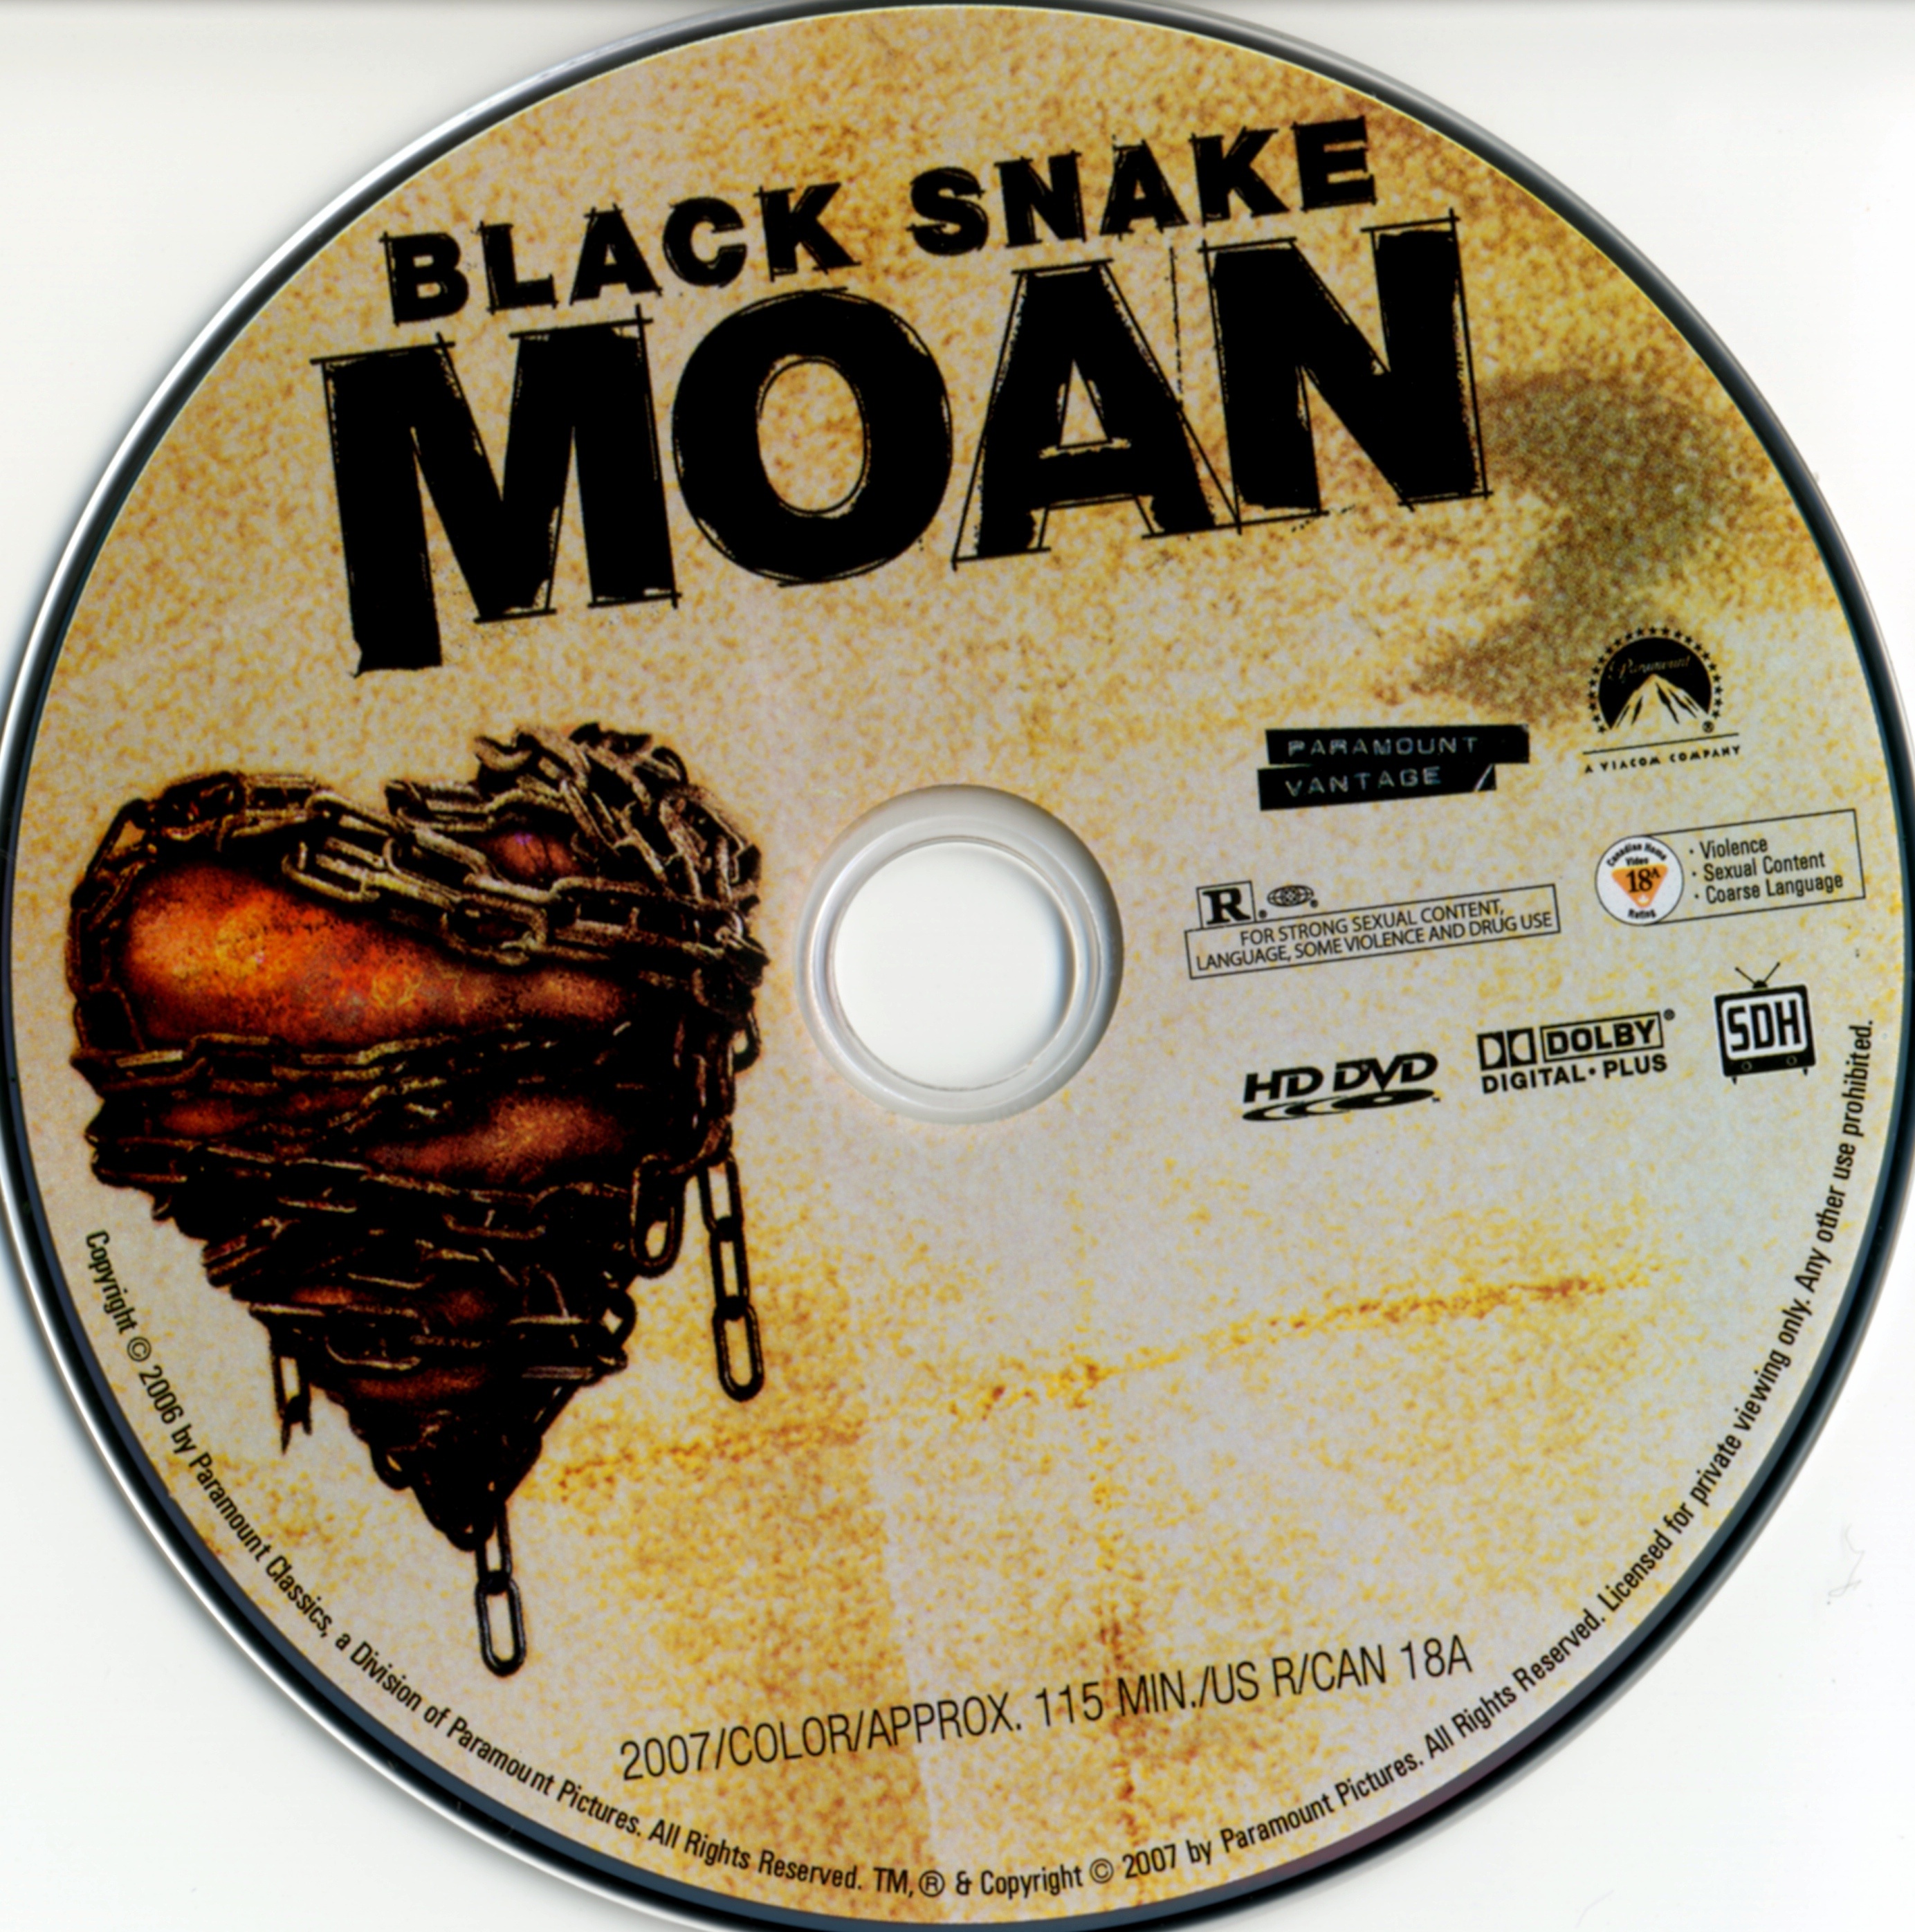 Black snake moan Zone 1